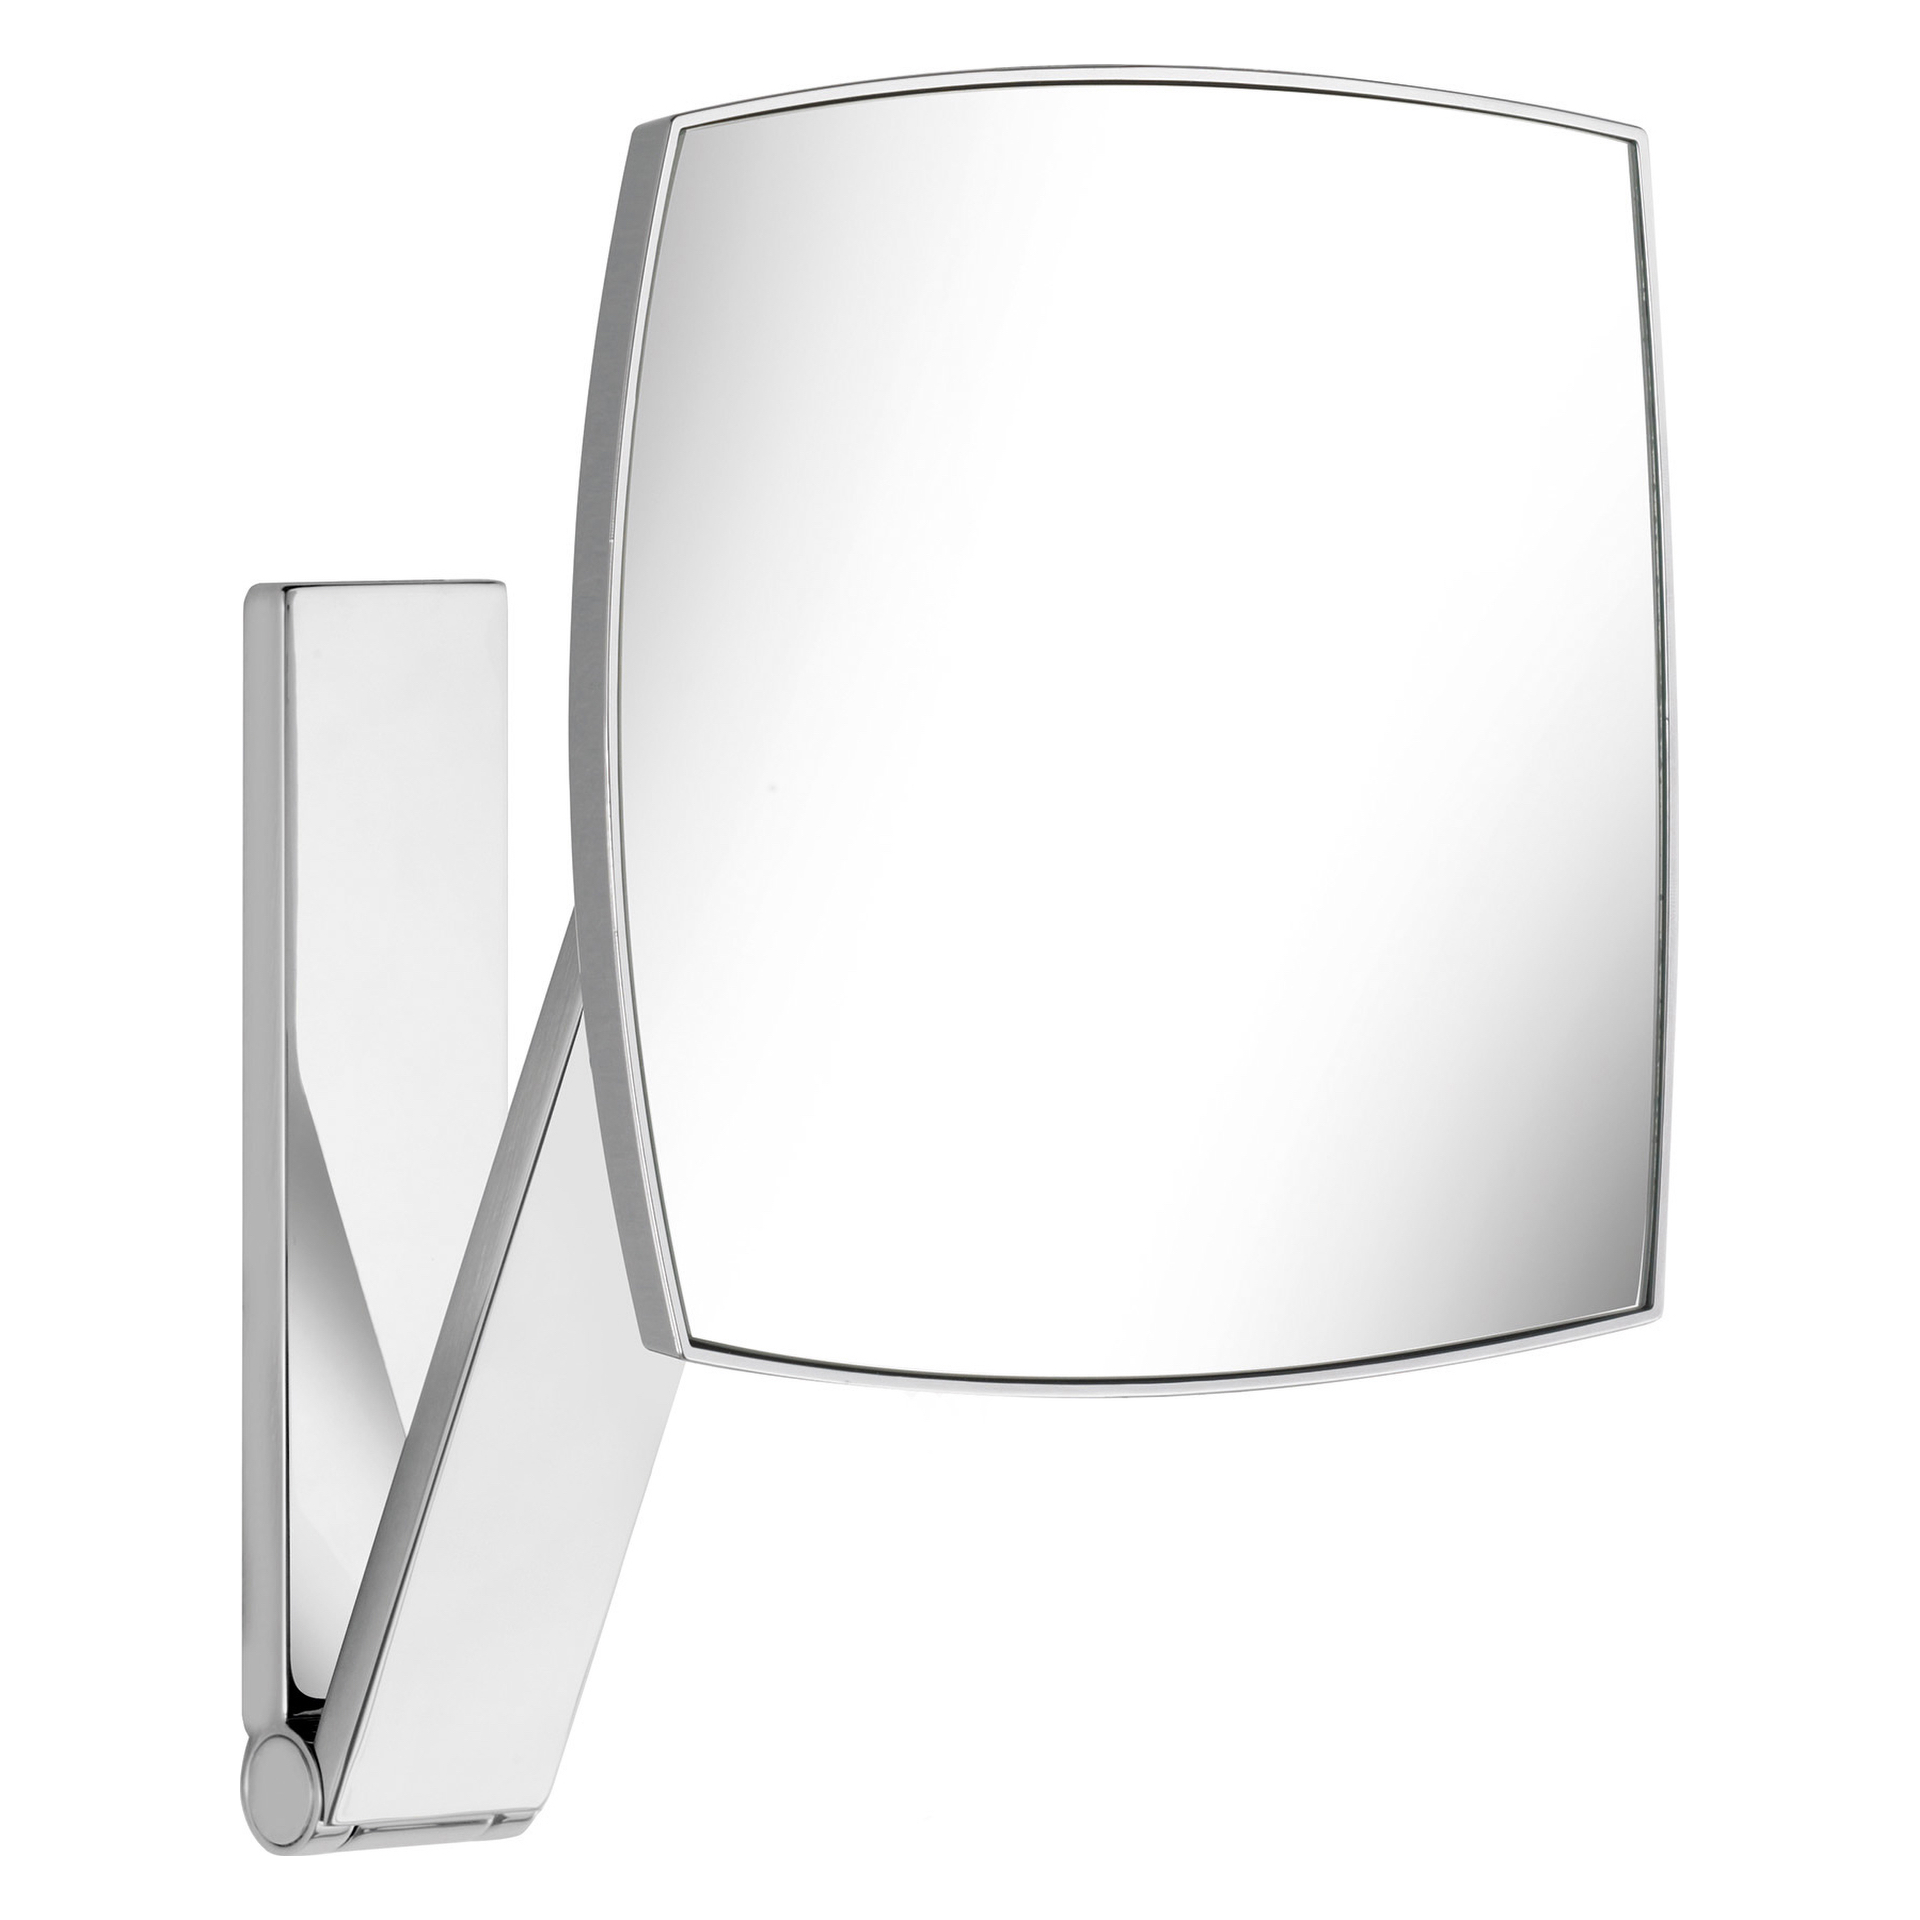 Kosmetikspiegel 17613170000 Kosmetikspiegel iLook_move Wandmodell, eckig Aluminium-finish